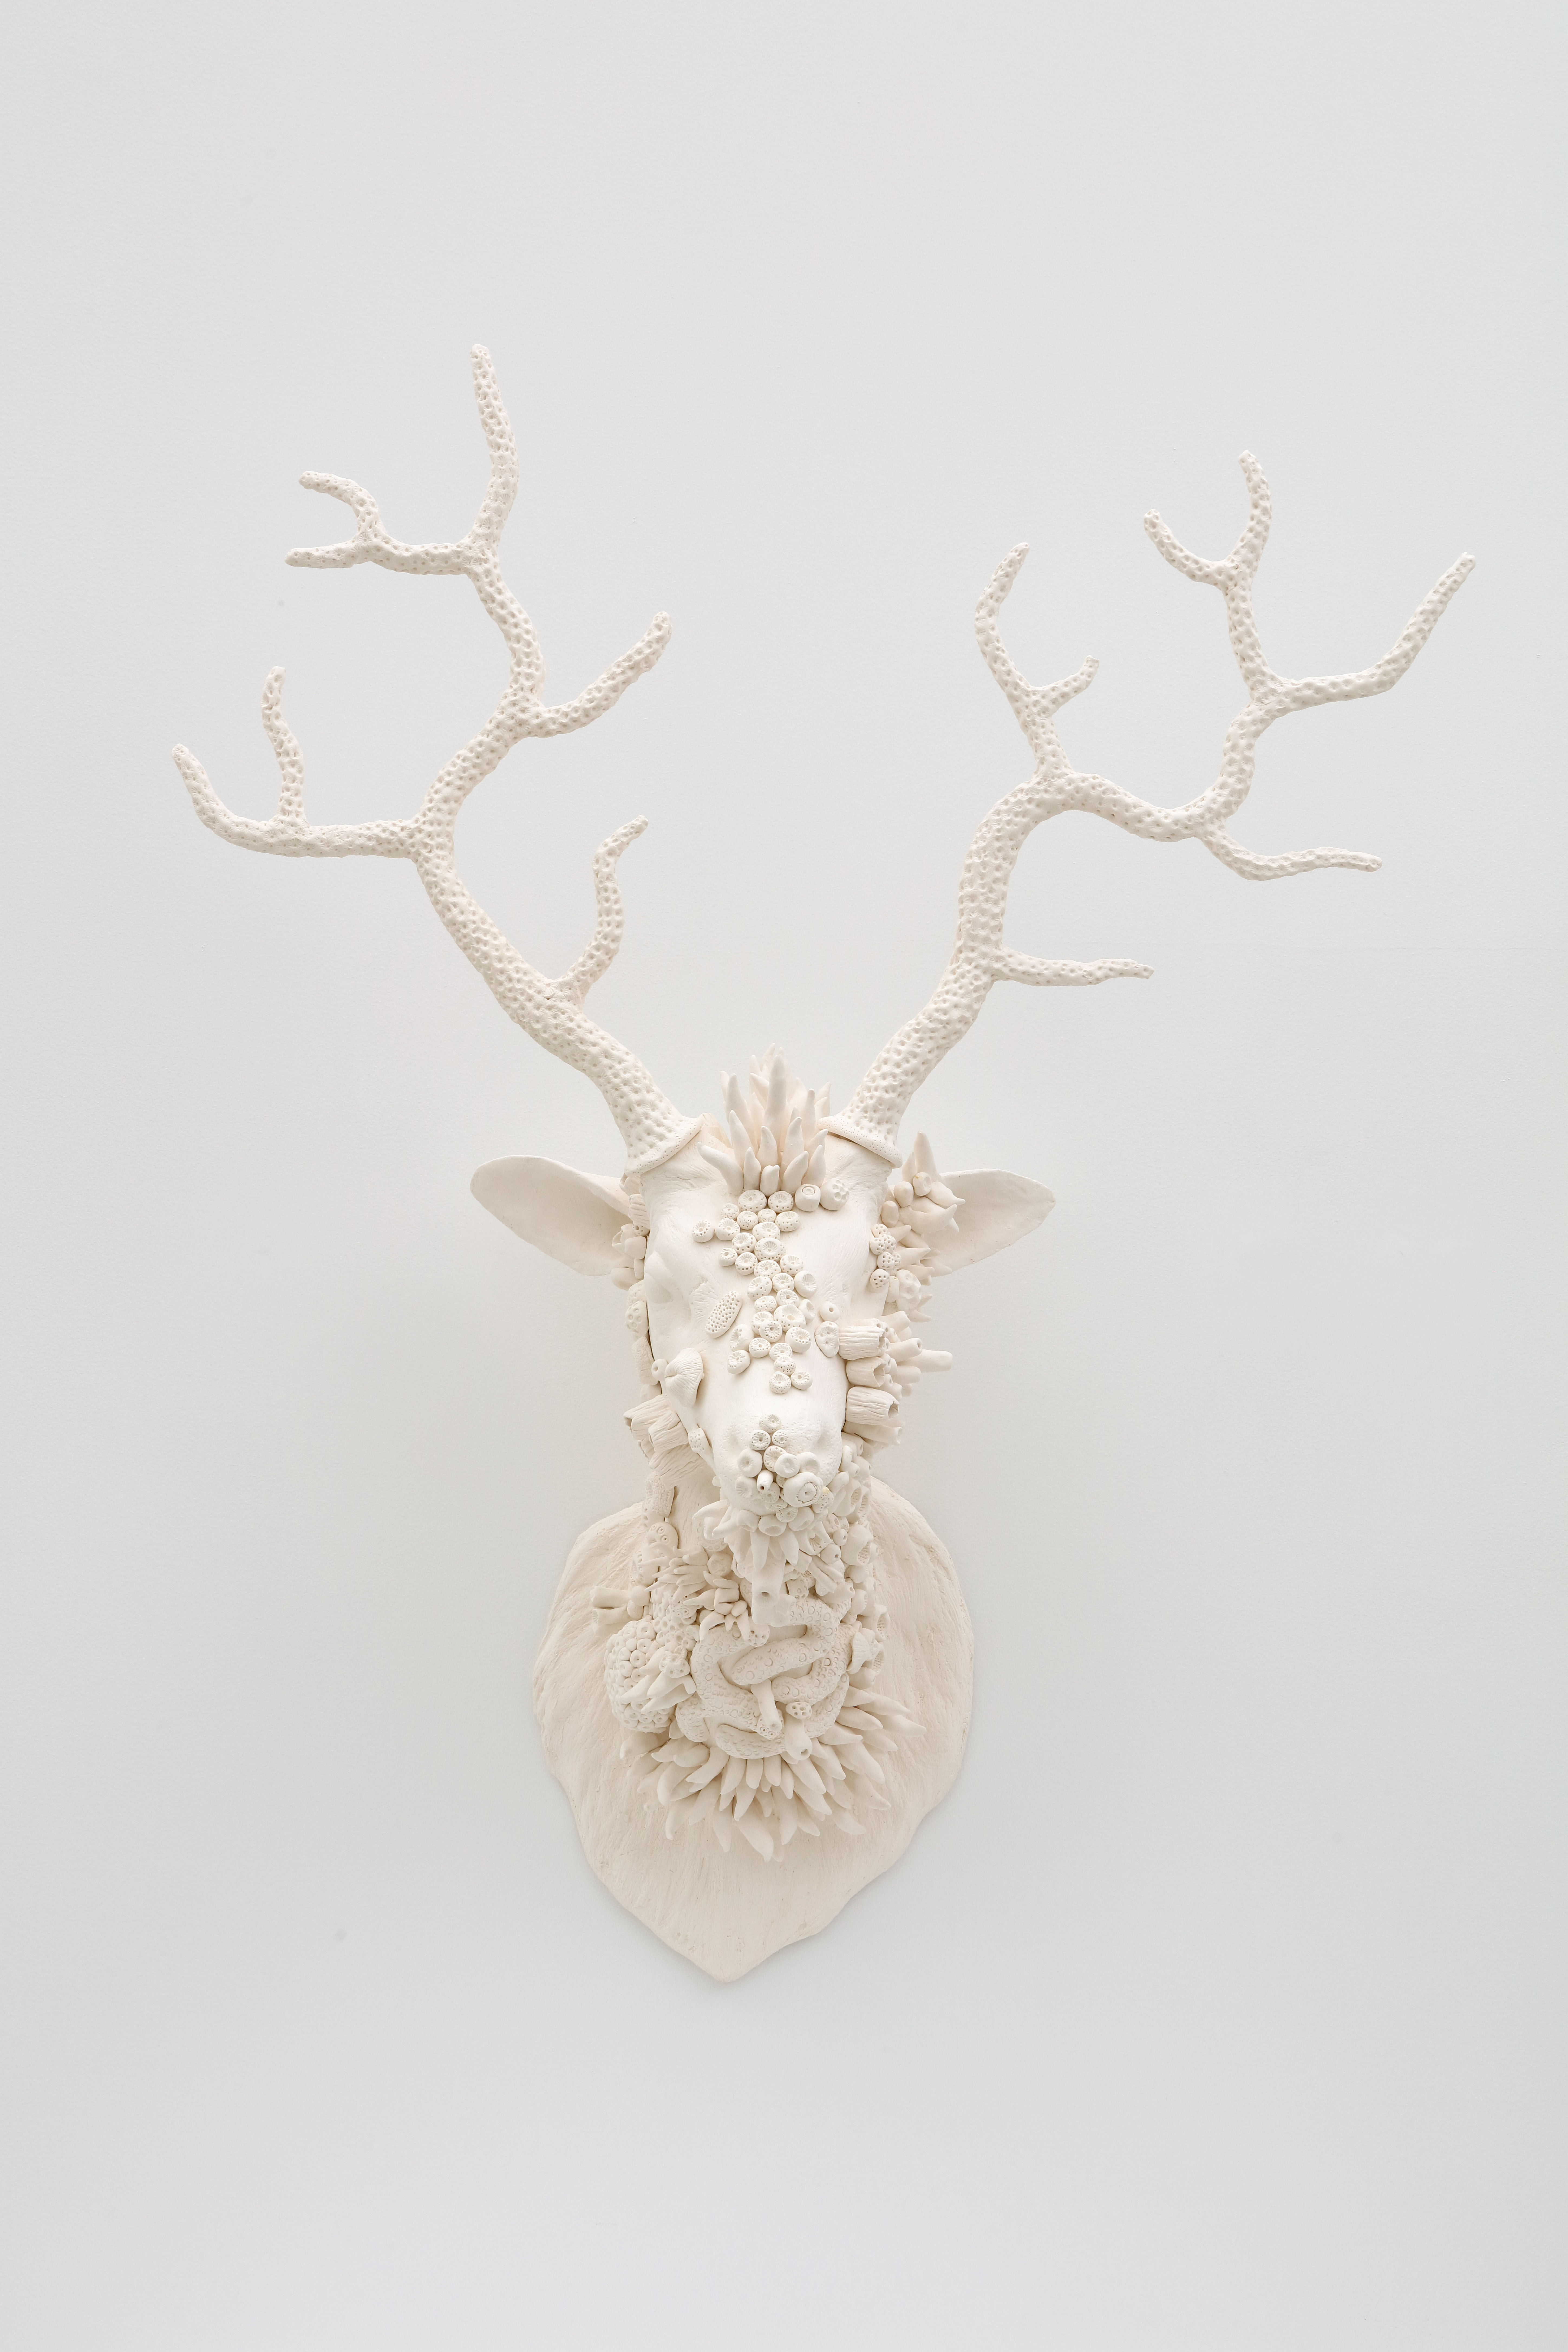 Dysbiotica – Deer 1 by Ken and Julia Yonetani, 2020